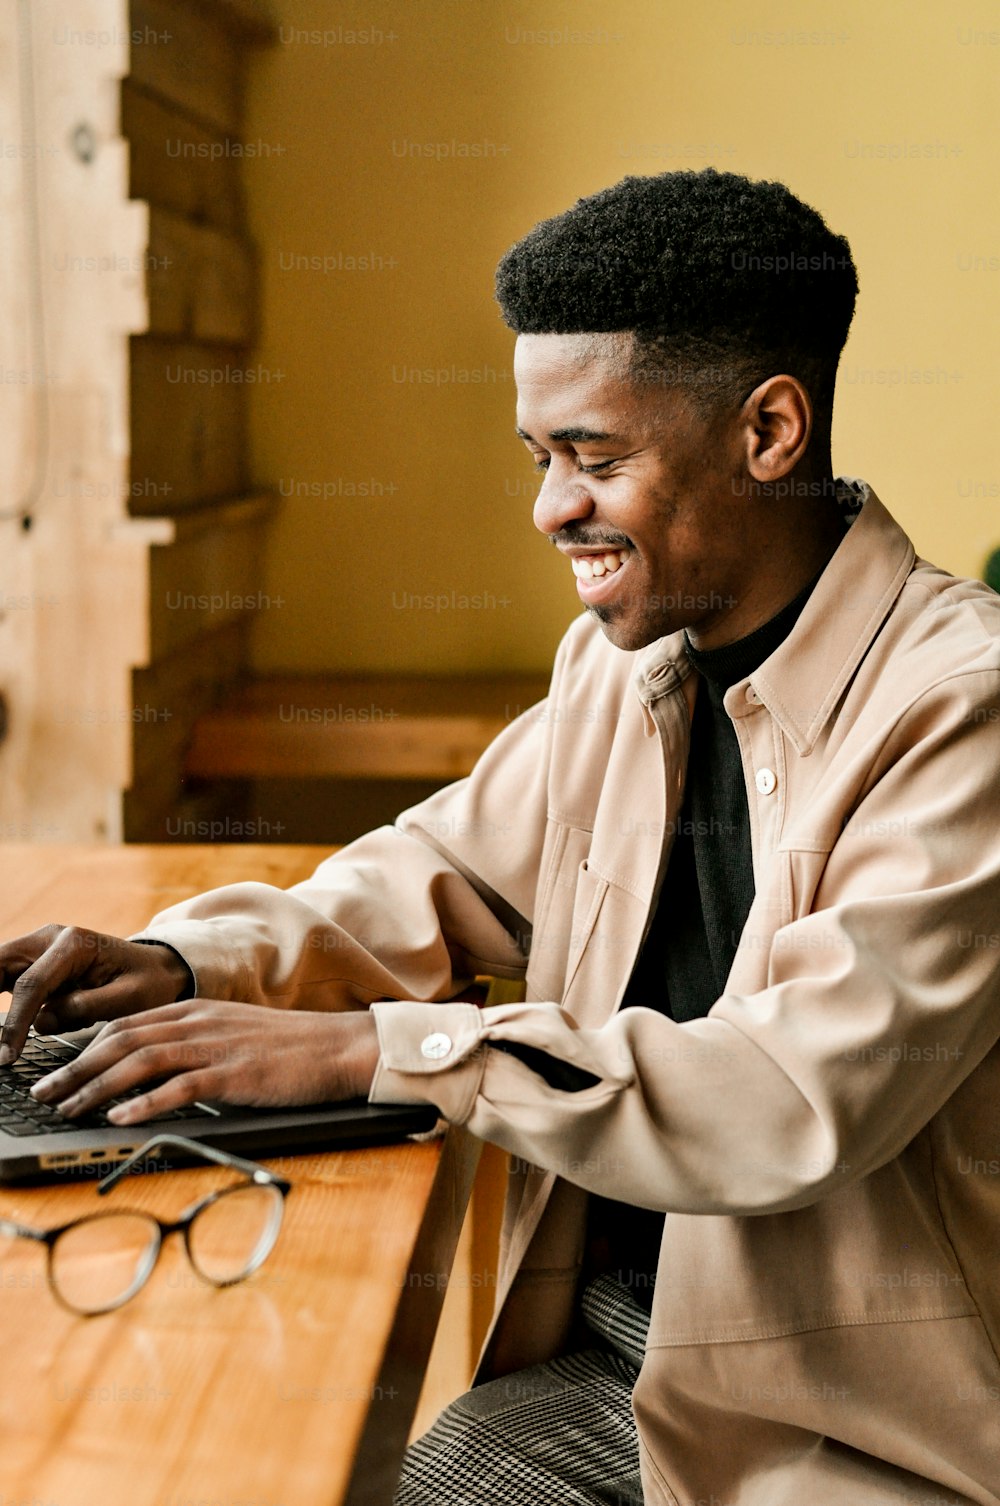 Un uomo che usa un computer portatile